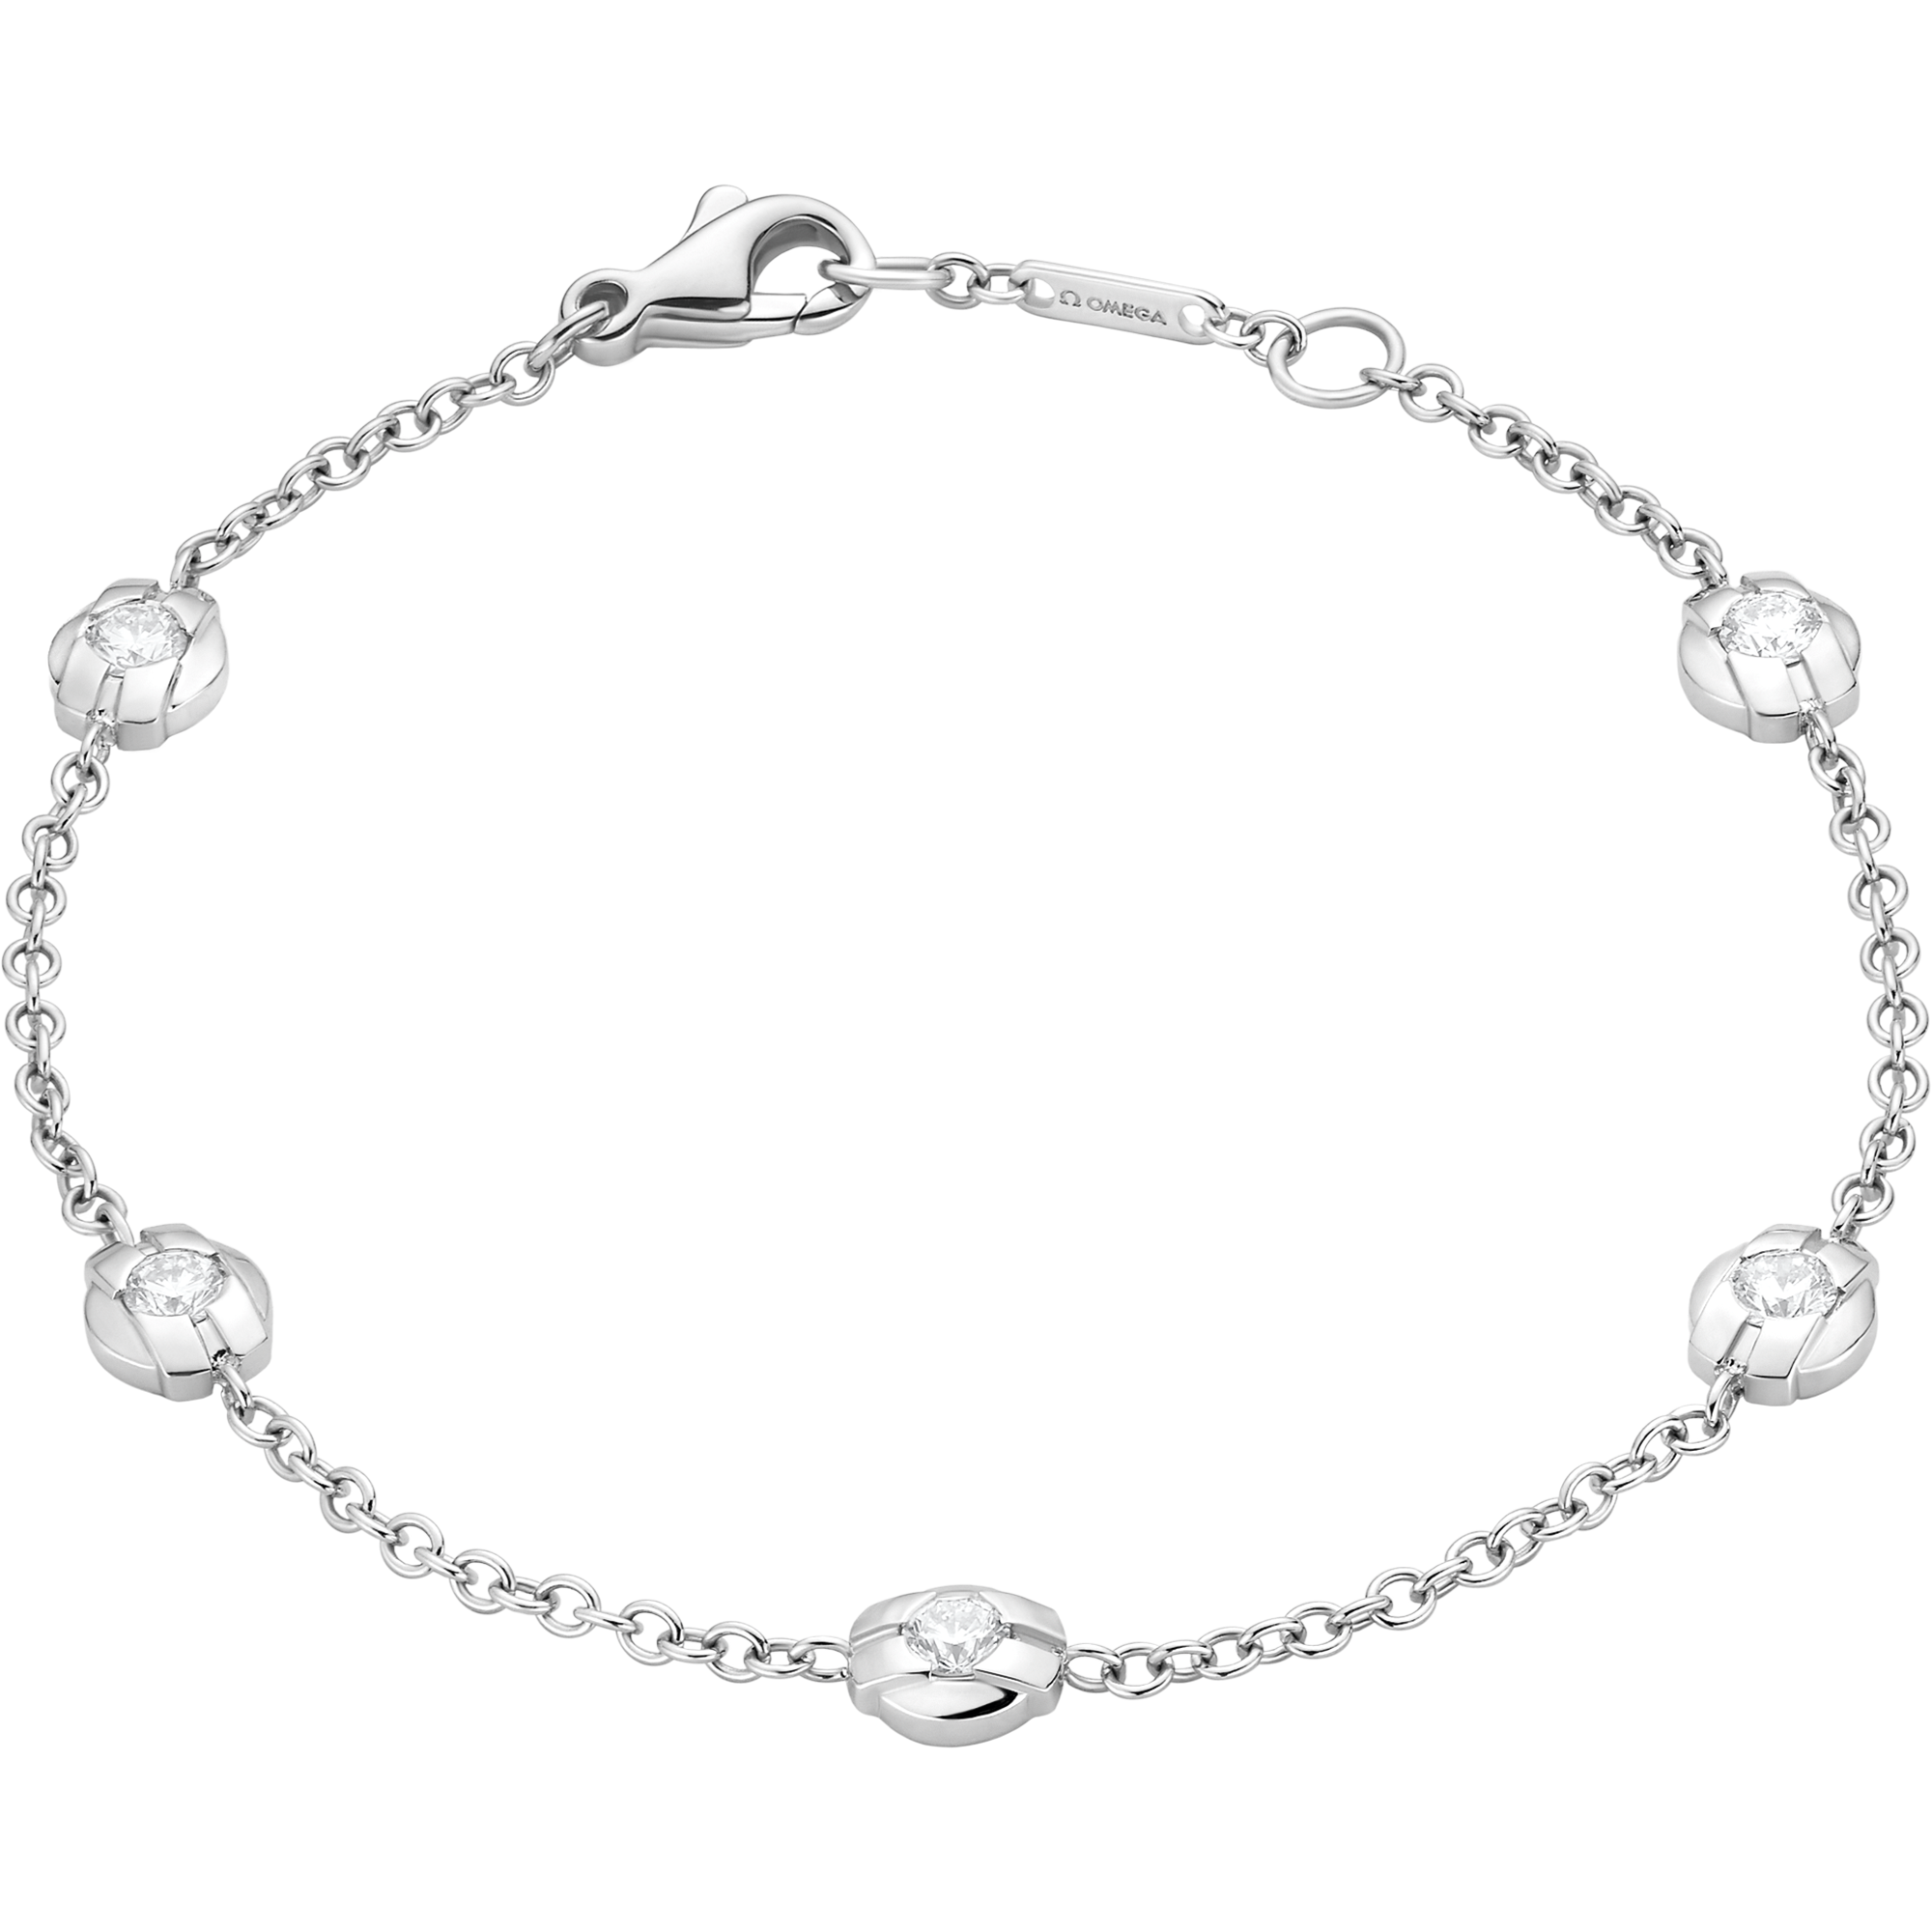 Constellation Bracelet, 18K white gold, Diamonds - BA01BC0100105